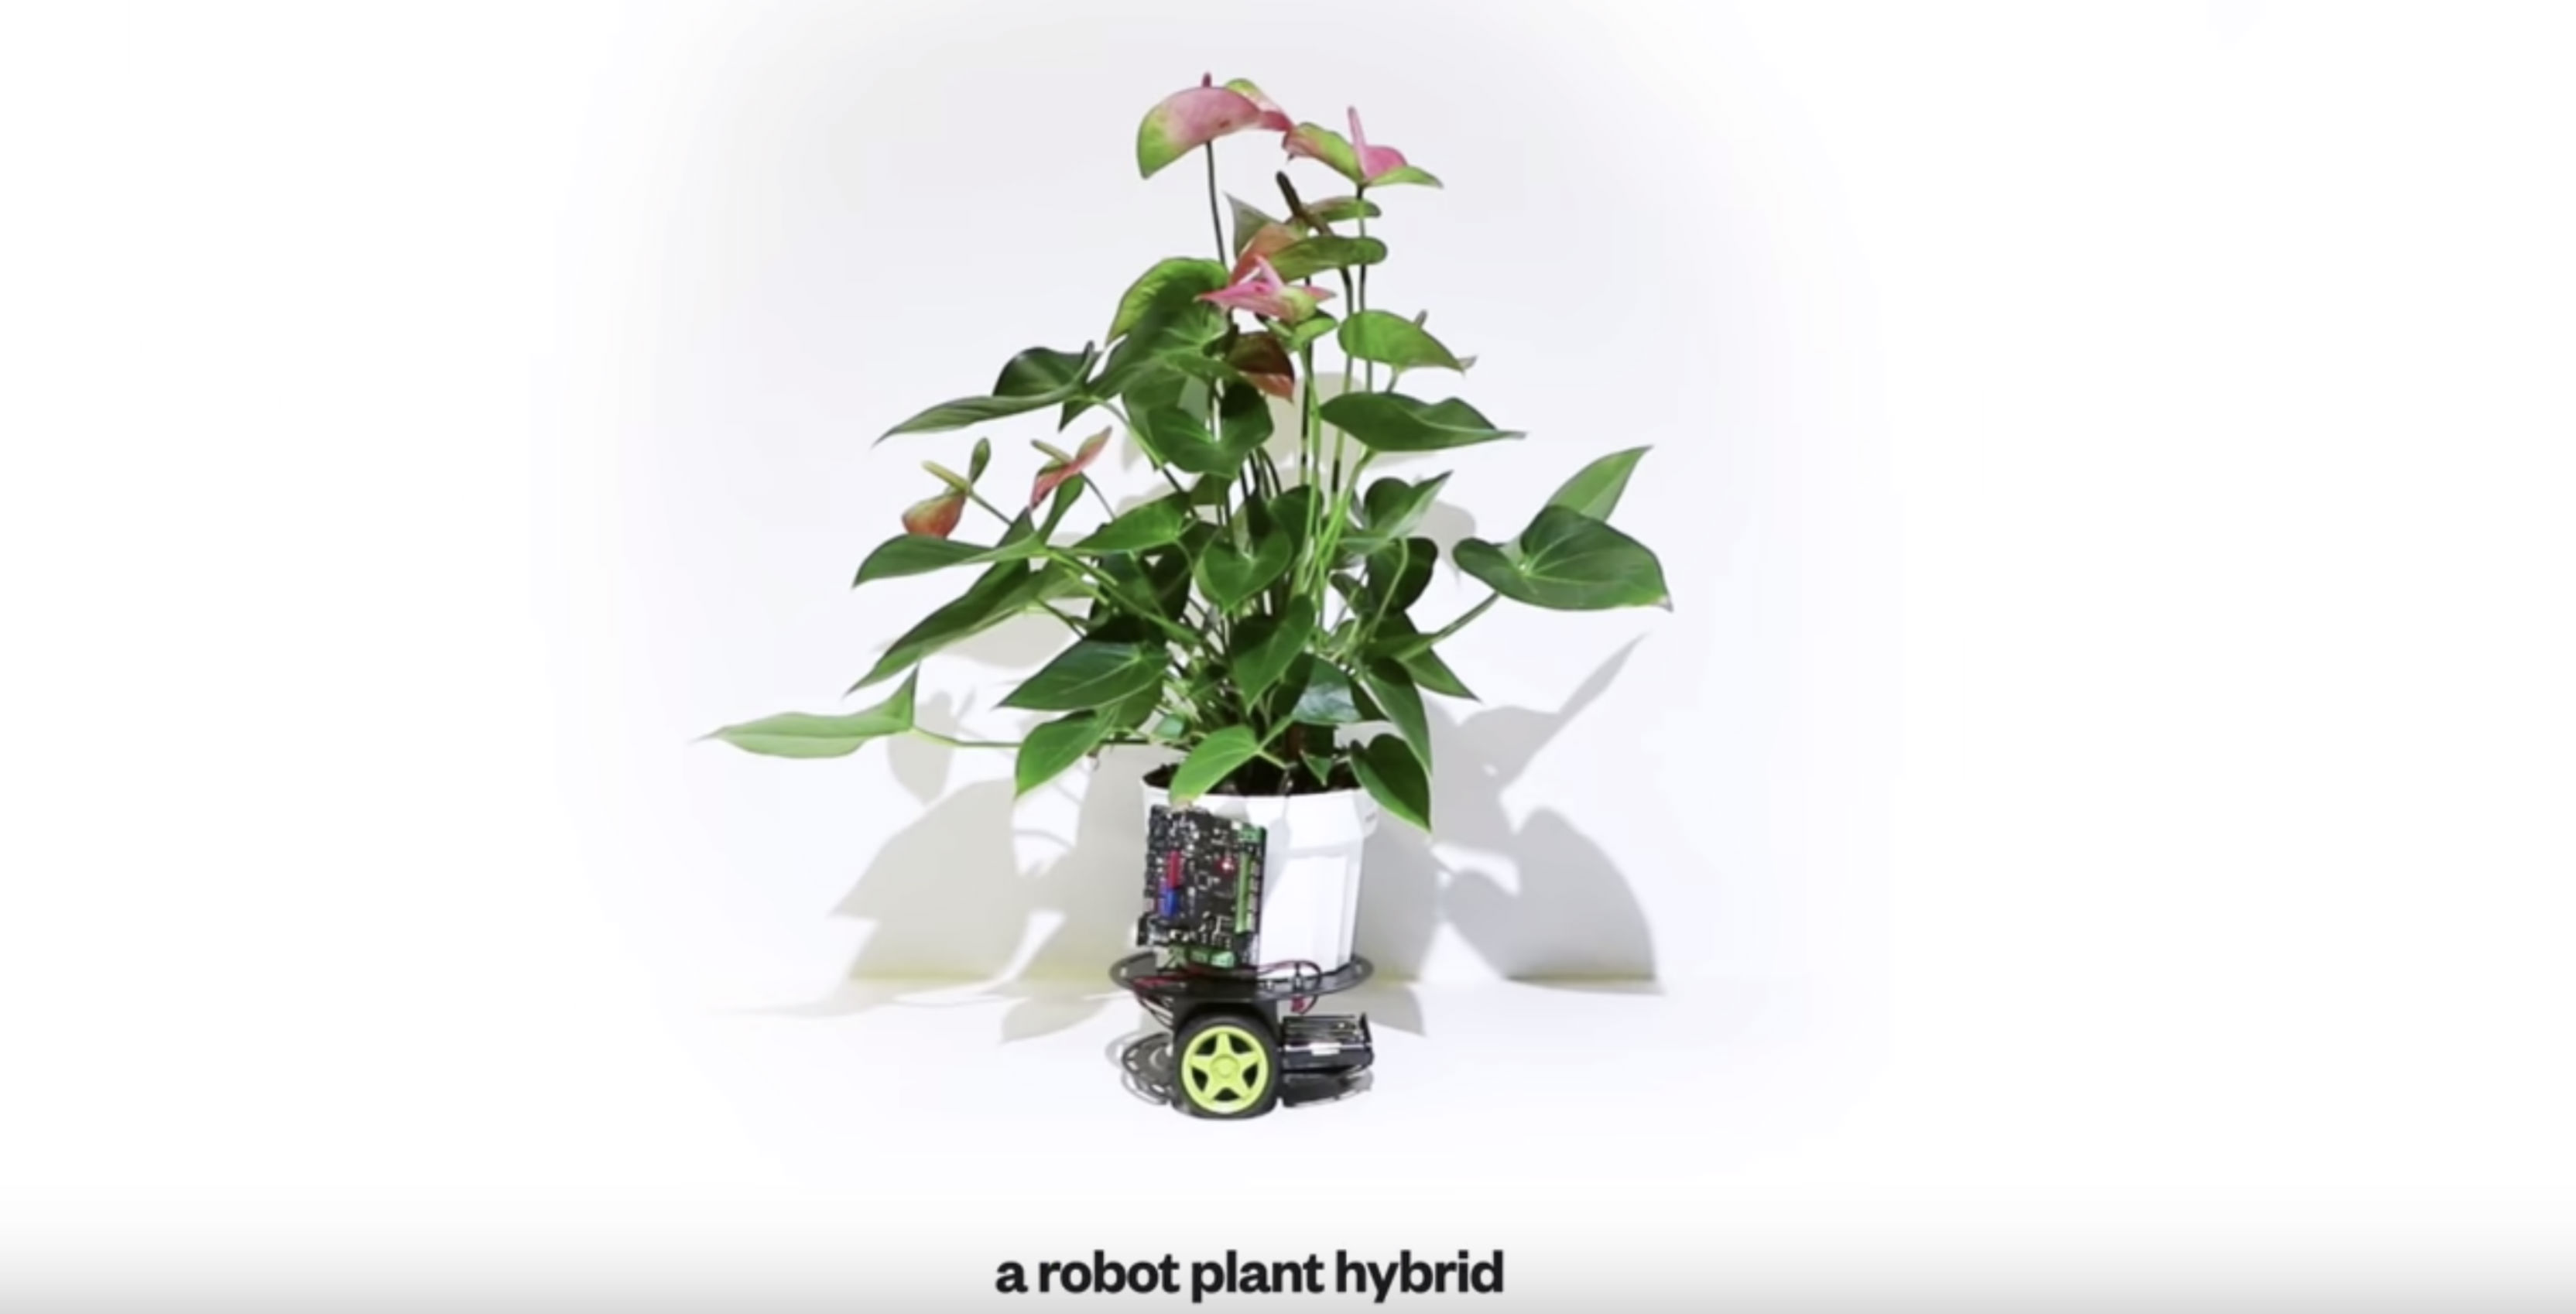 MIT uses robotics to keep plants alive